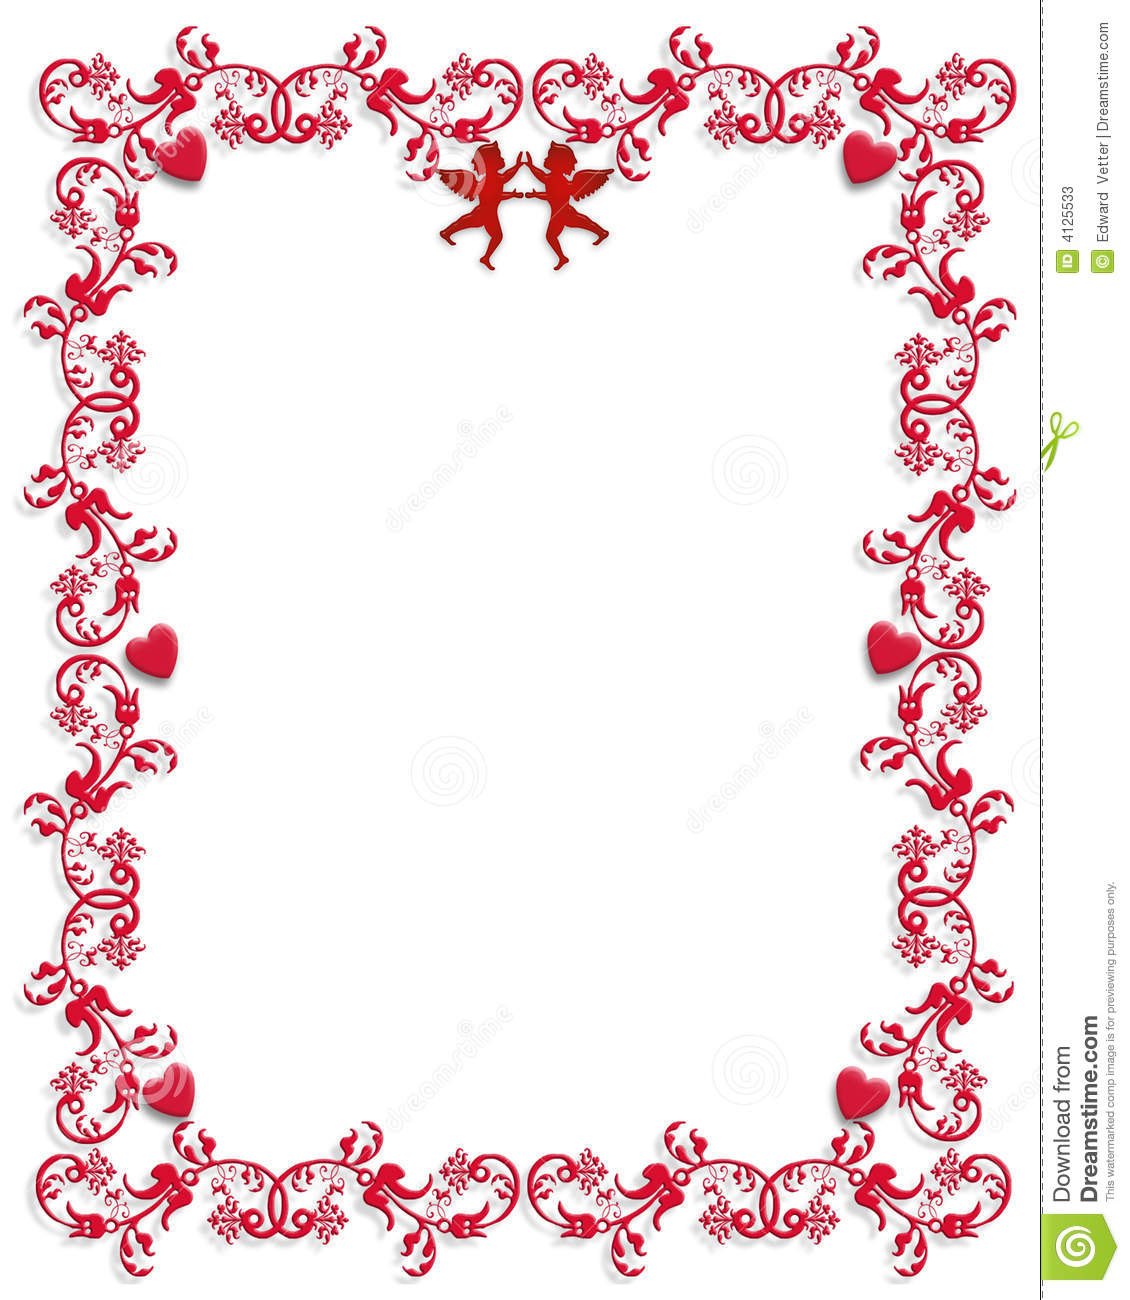 3d Illustration For Valentines Day Frame Background Or Border With